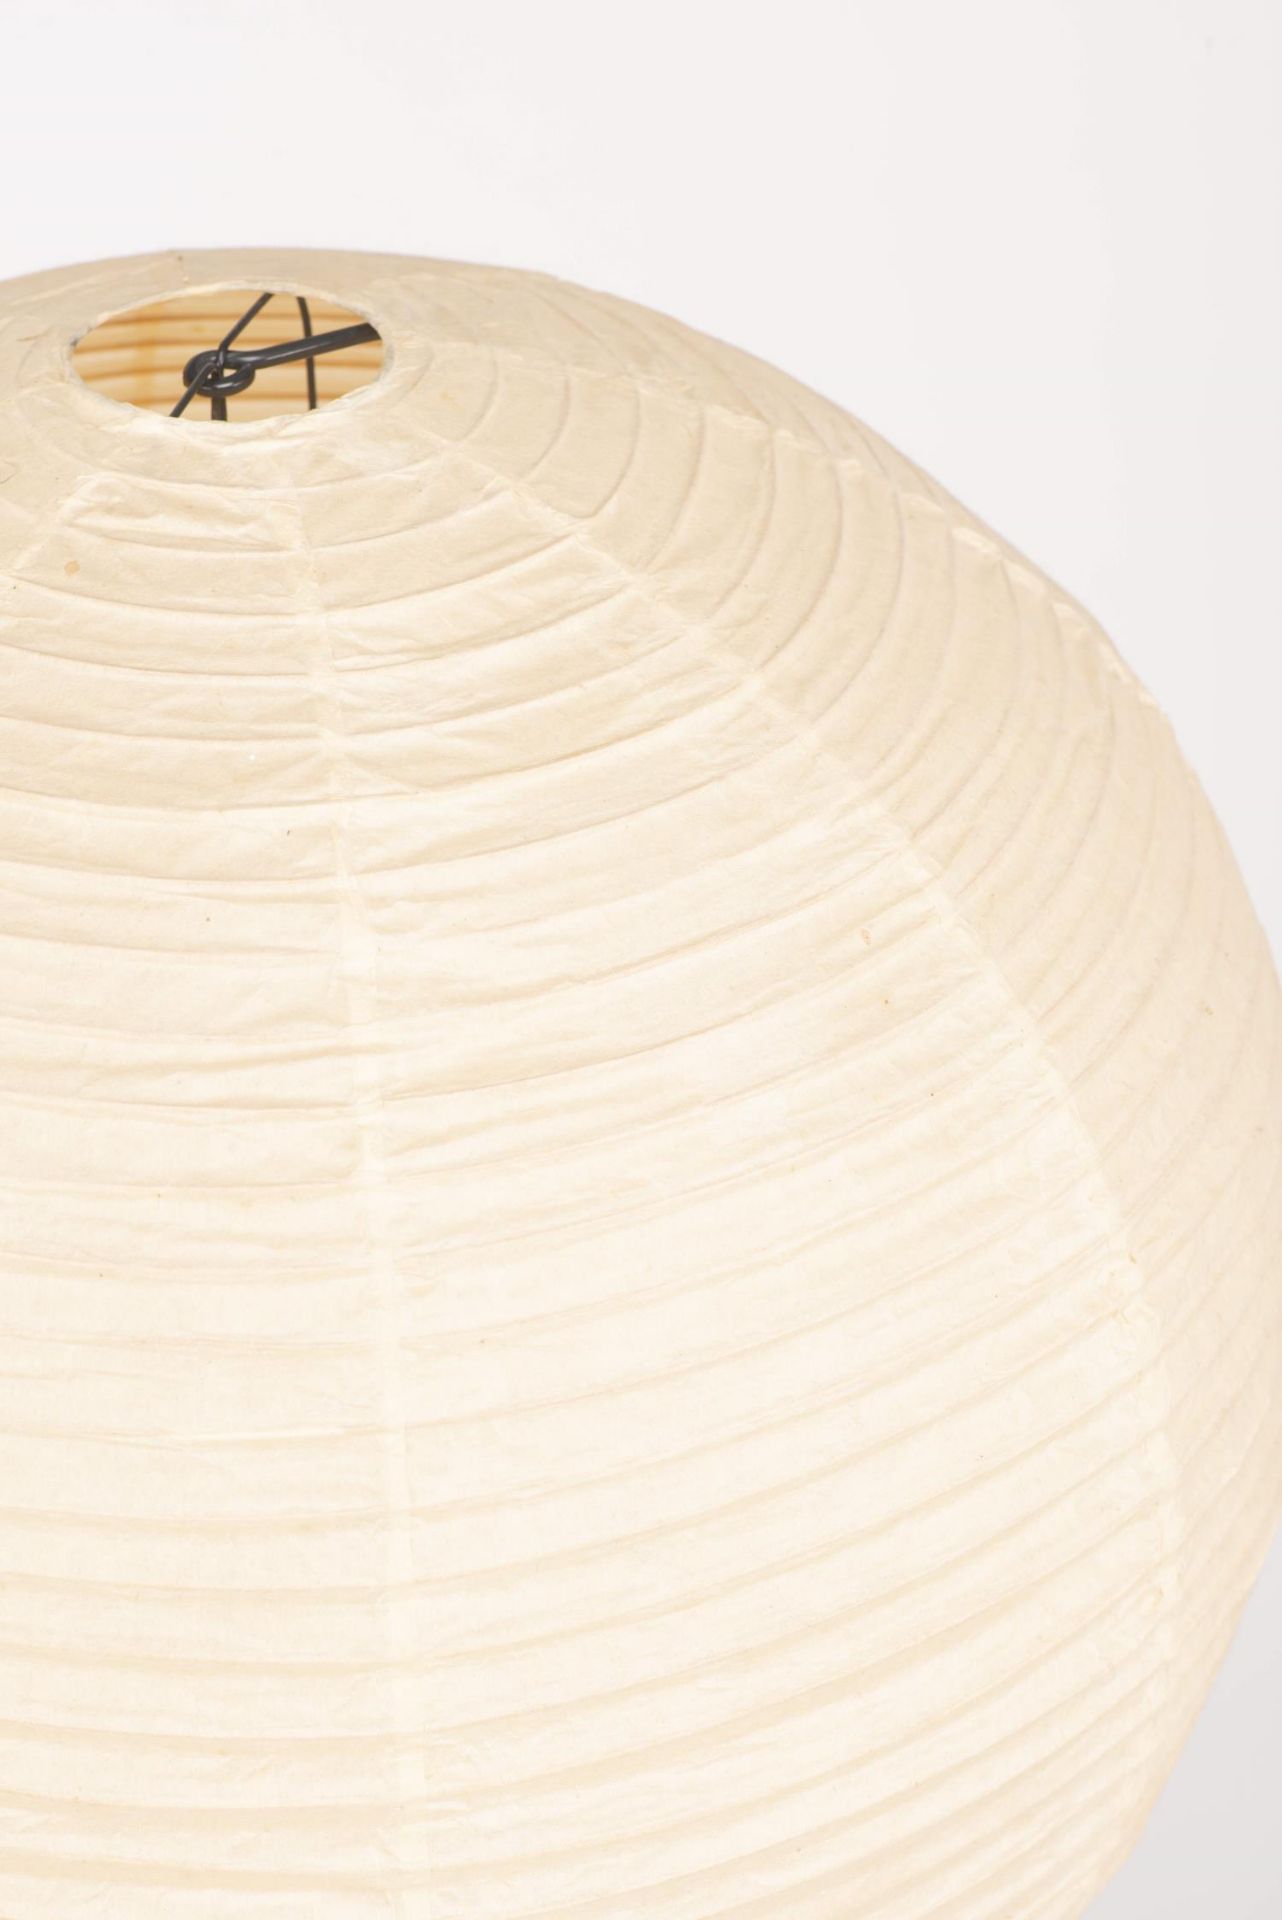 Isamu Noguchi (1904-1988), lampadaire en fer, papier Washi et bambou - Image 15 of 20